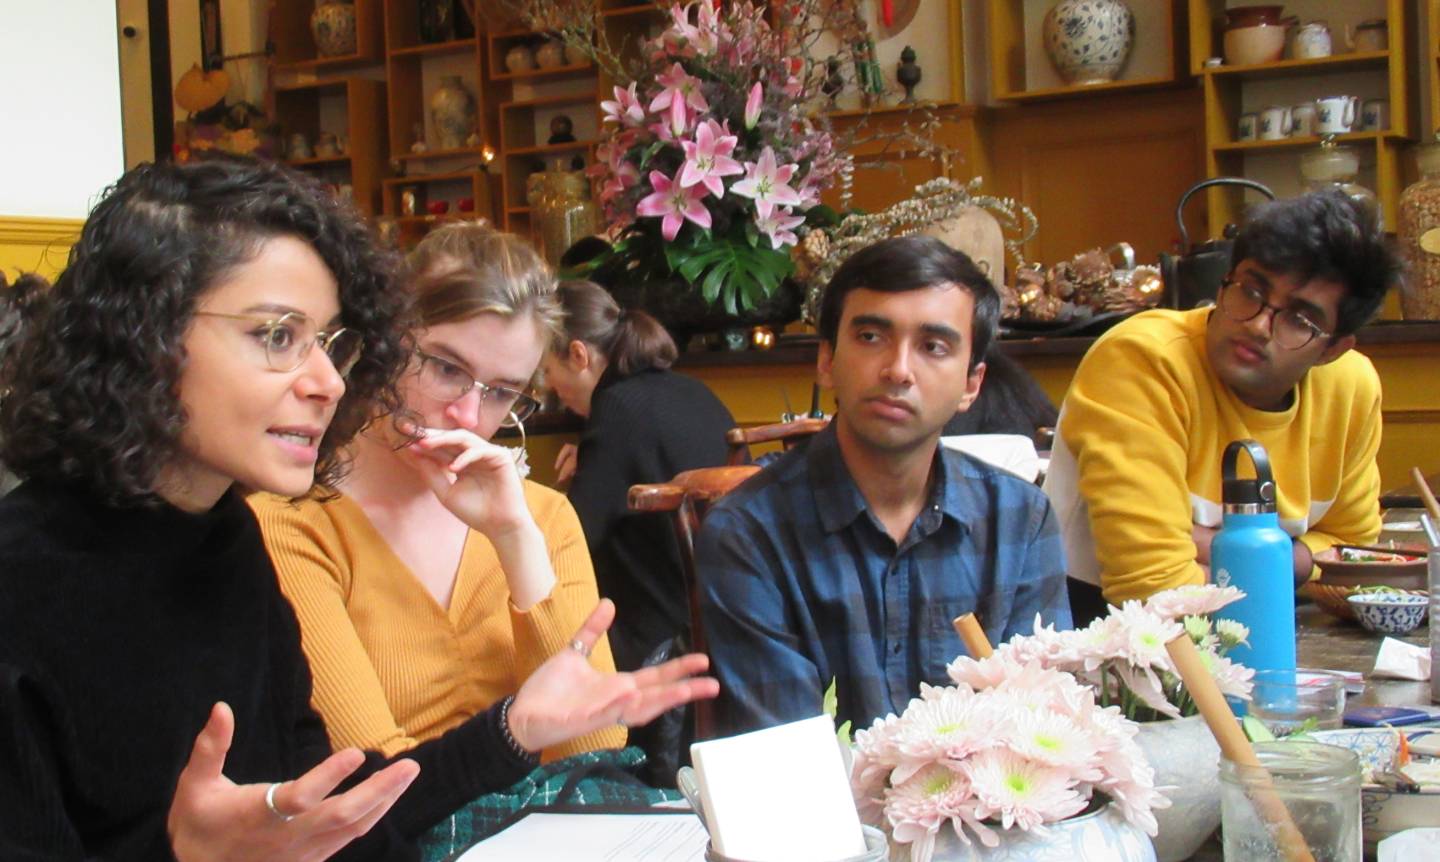 Berlin journalist with three Princeton students